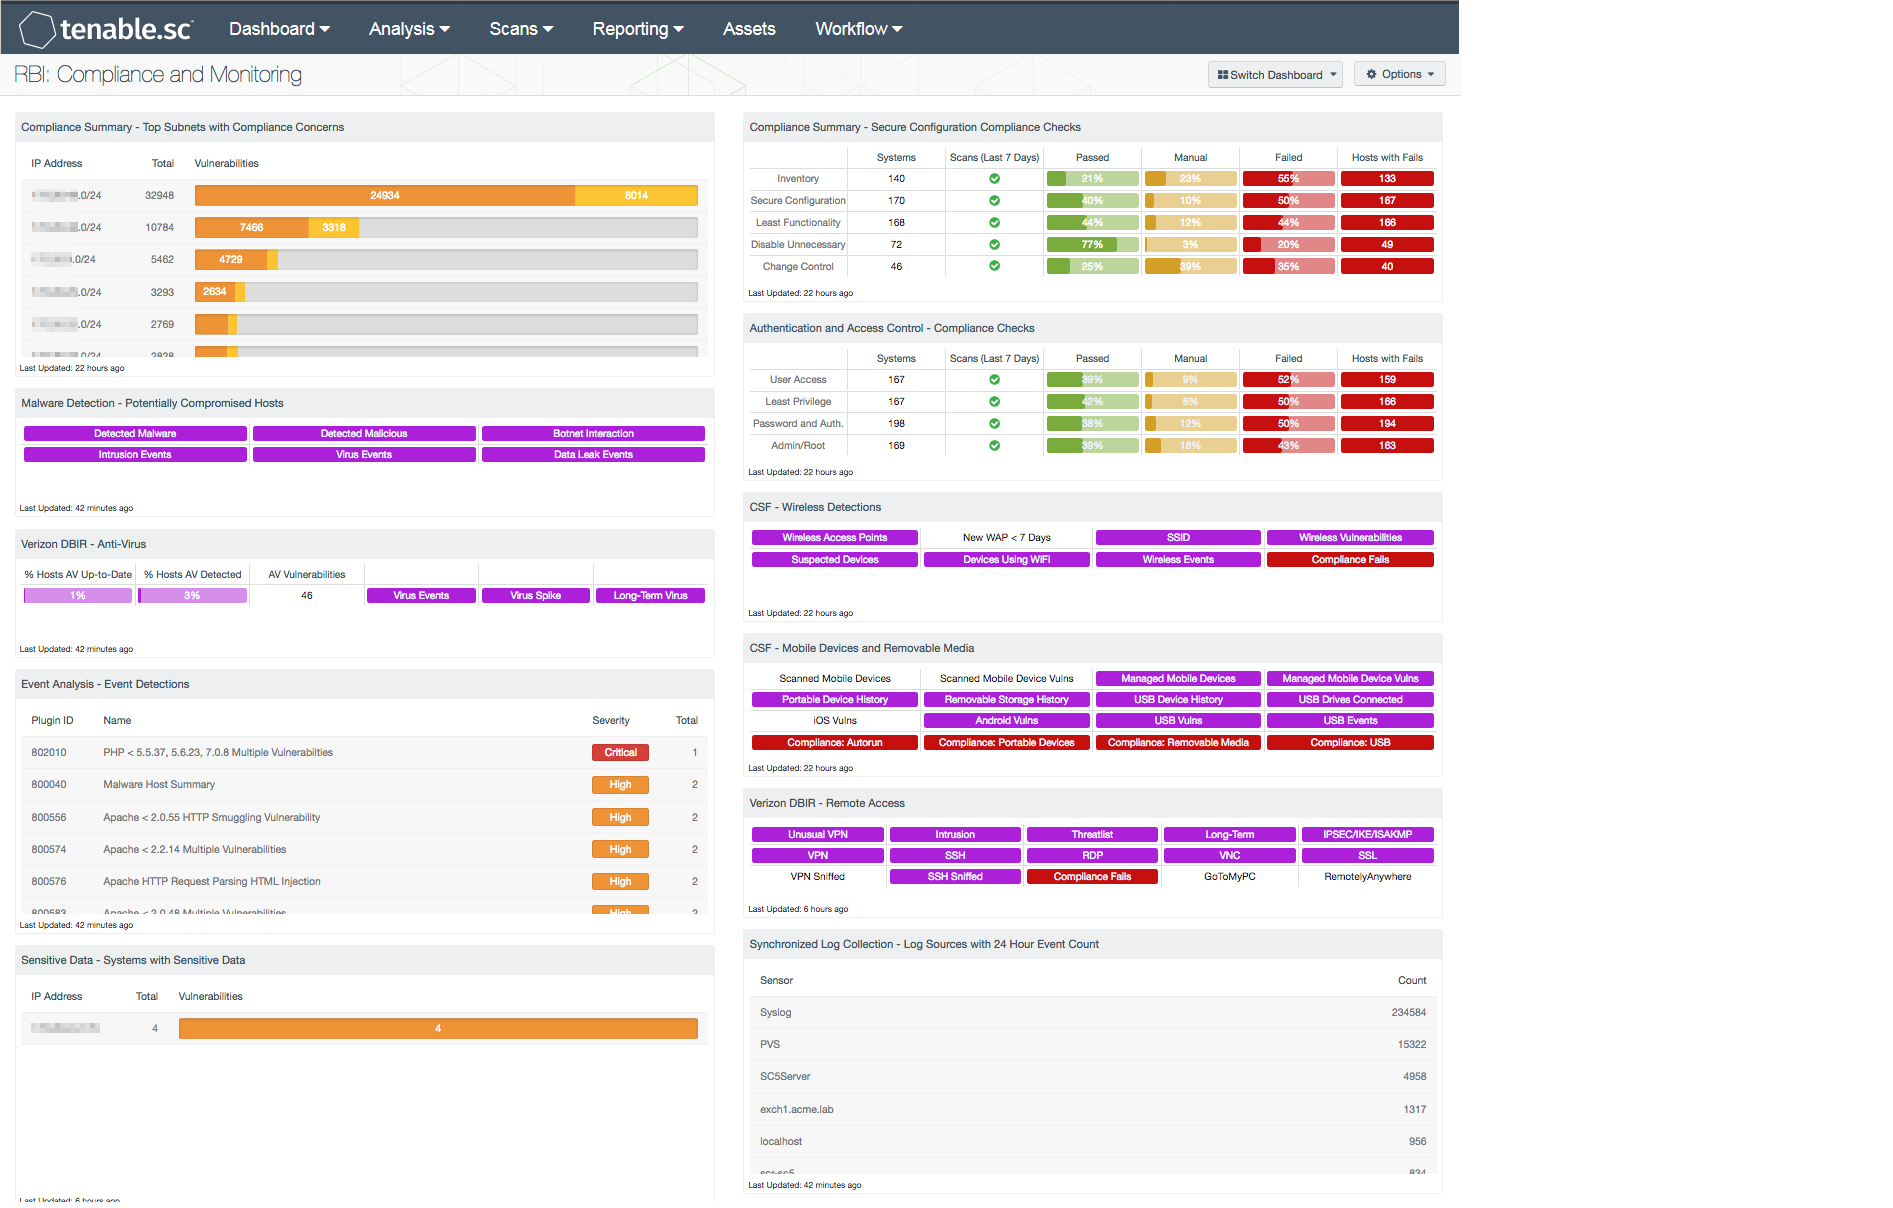 RBI: Compliance and Monitoring Dashboard Screenshot